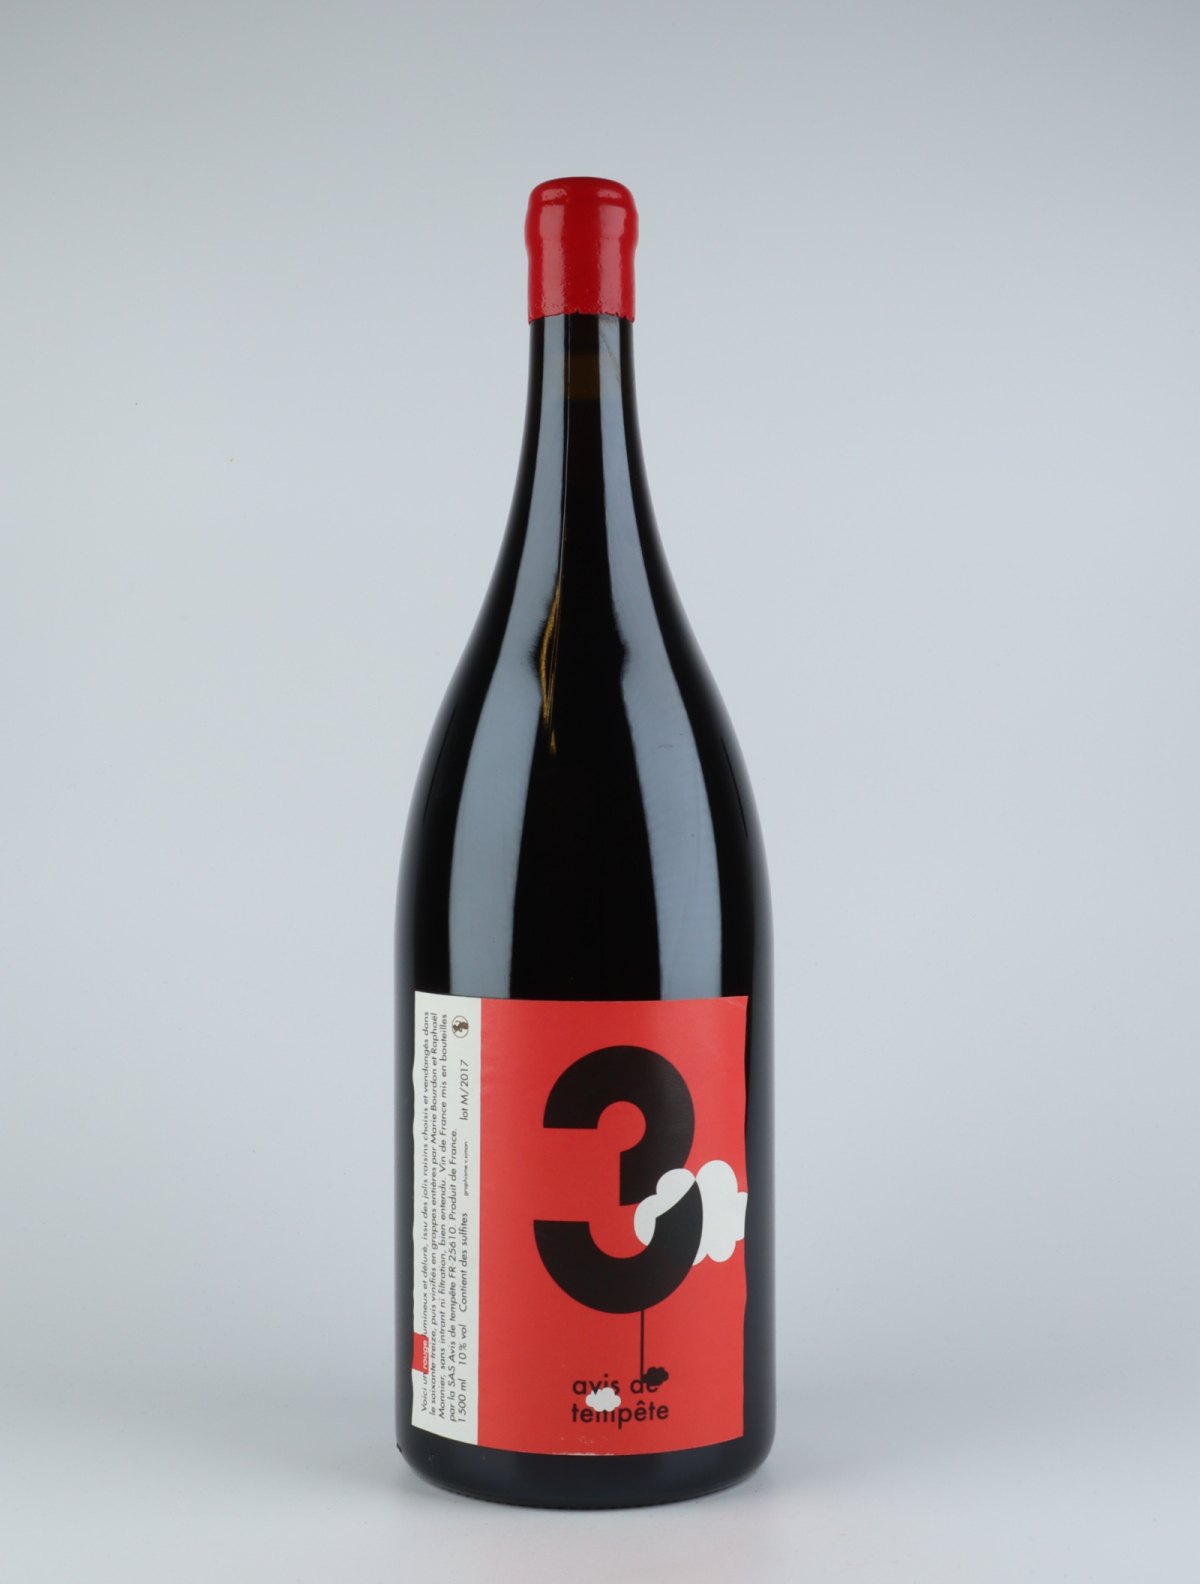 A bottle 2017 Mondeuse nr. 3 Red wine from Avis de Tempete, Savoie in France